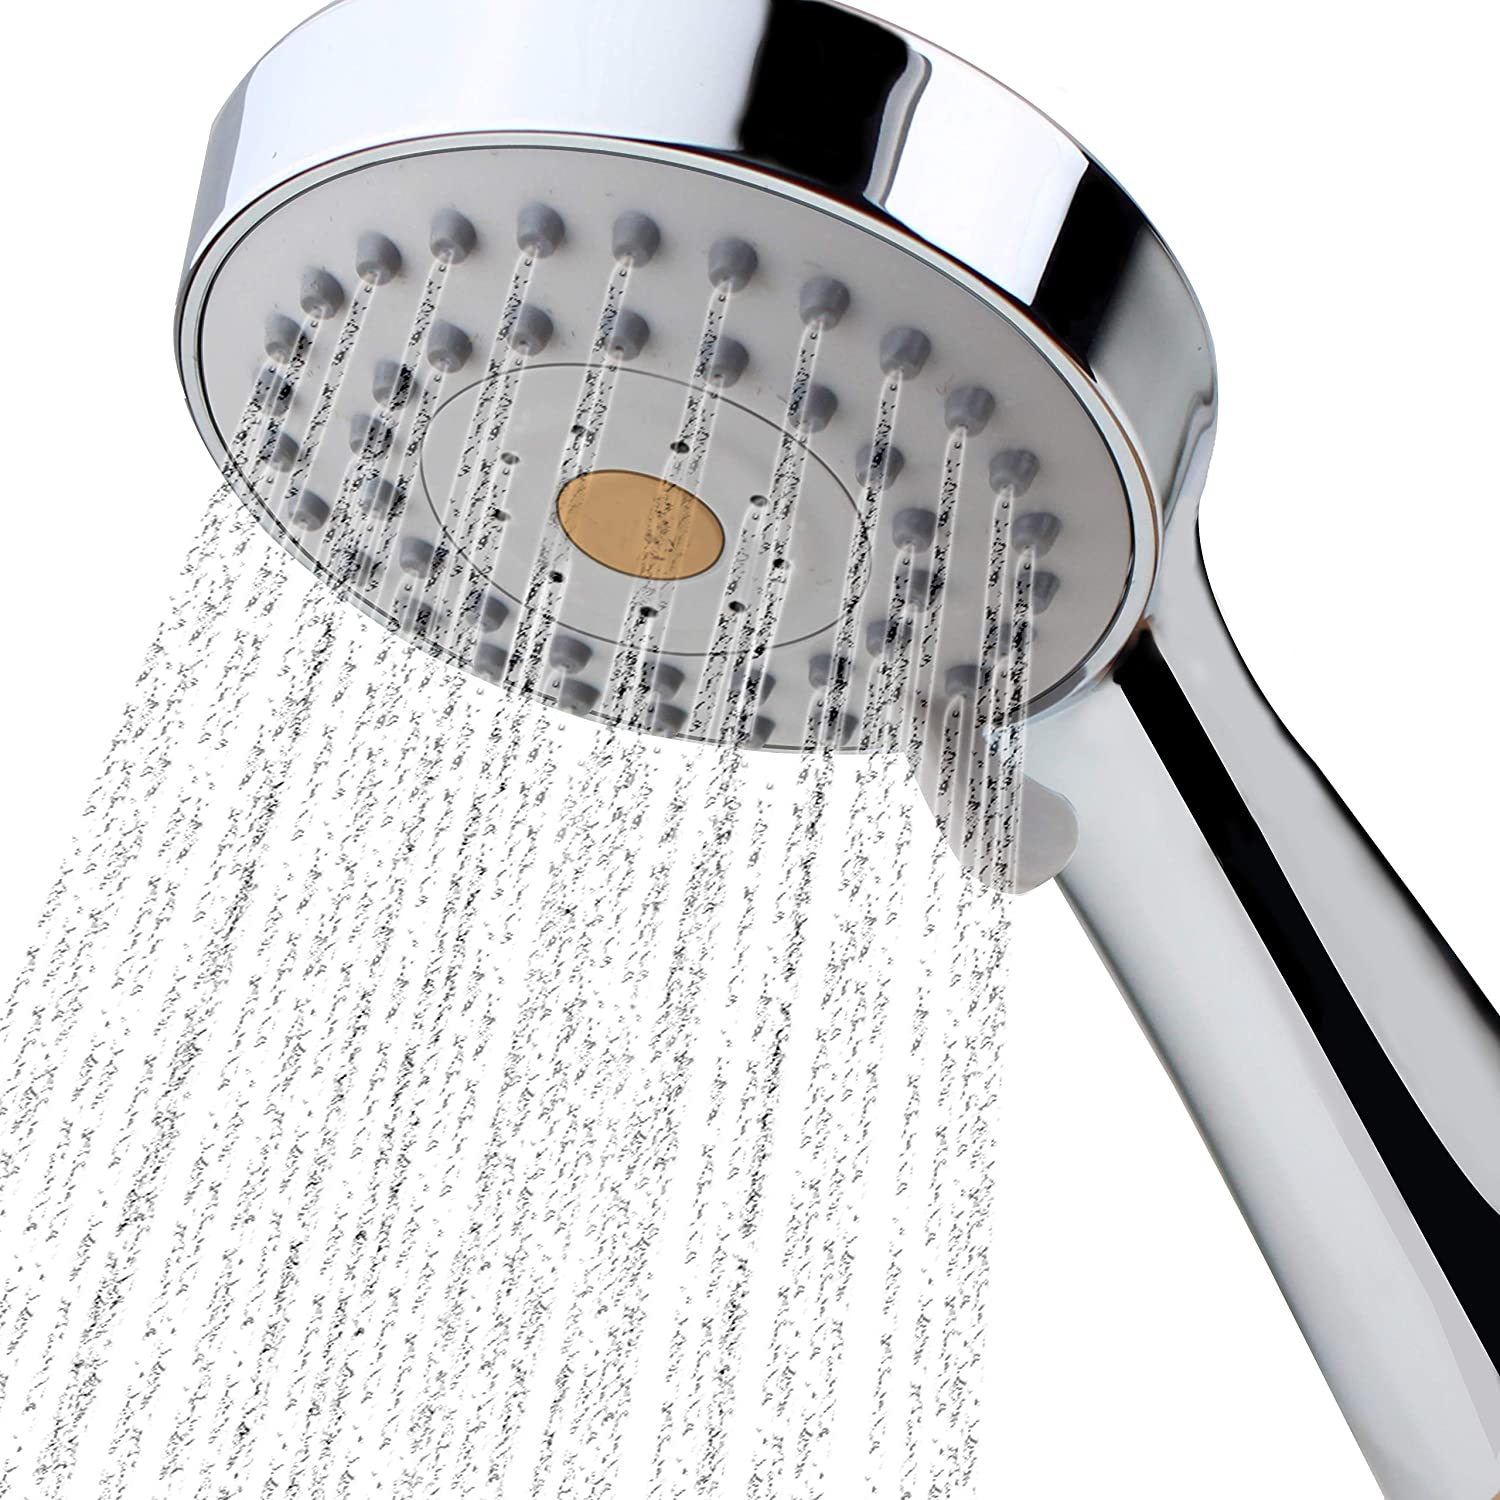 Amazon most useful home products high pressure showerhead.jpg